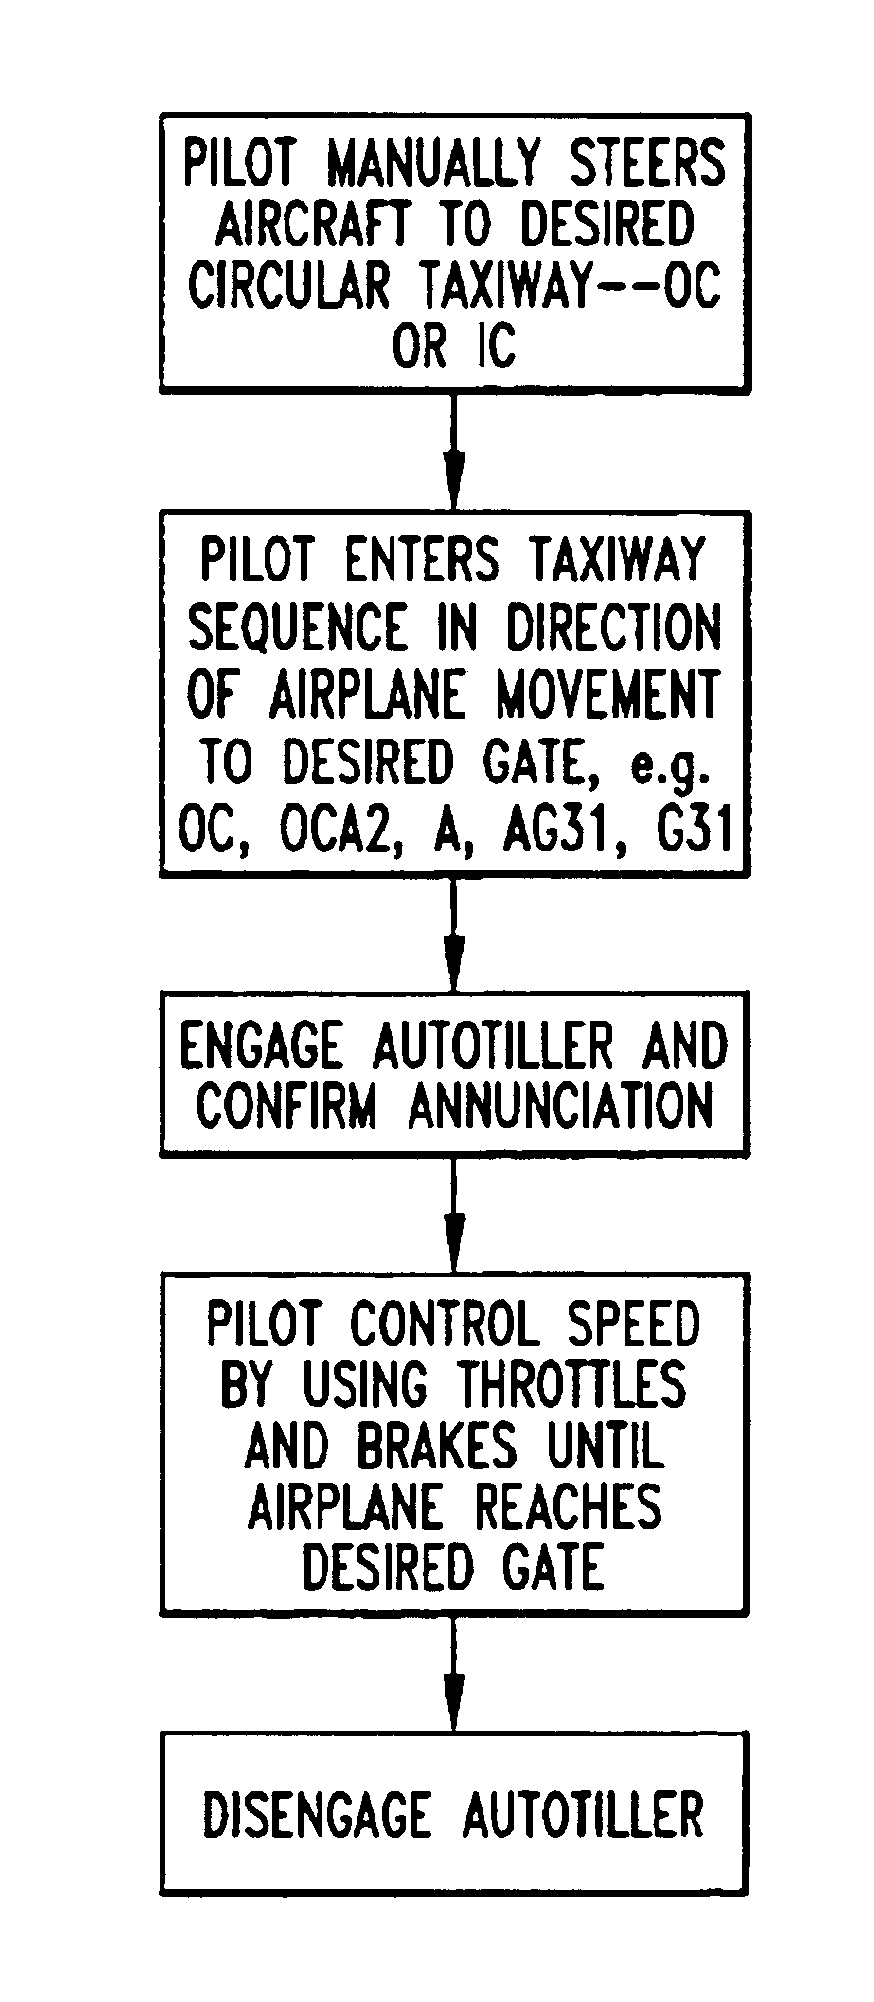 Autotiller control system for aircraft